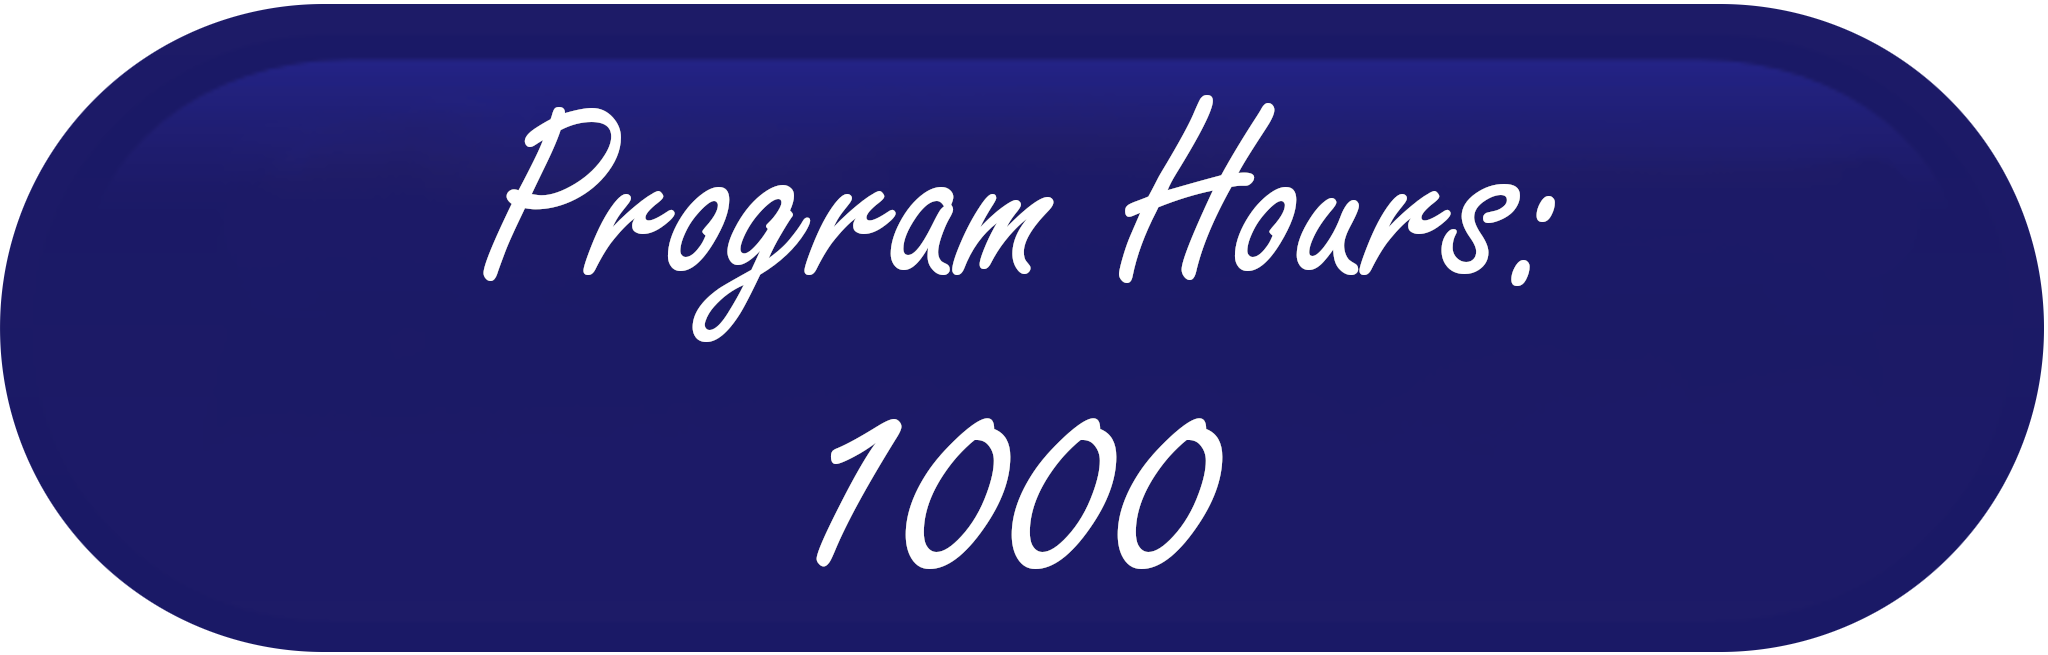 Program-Hours-1000 (1)